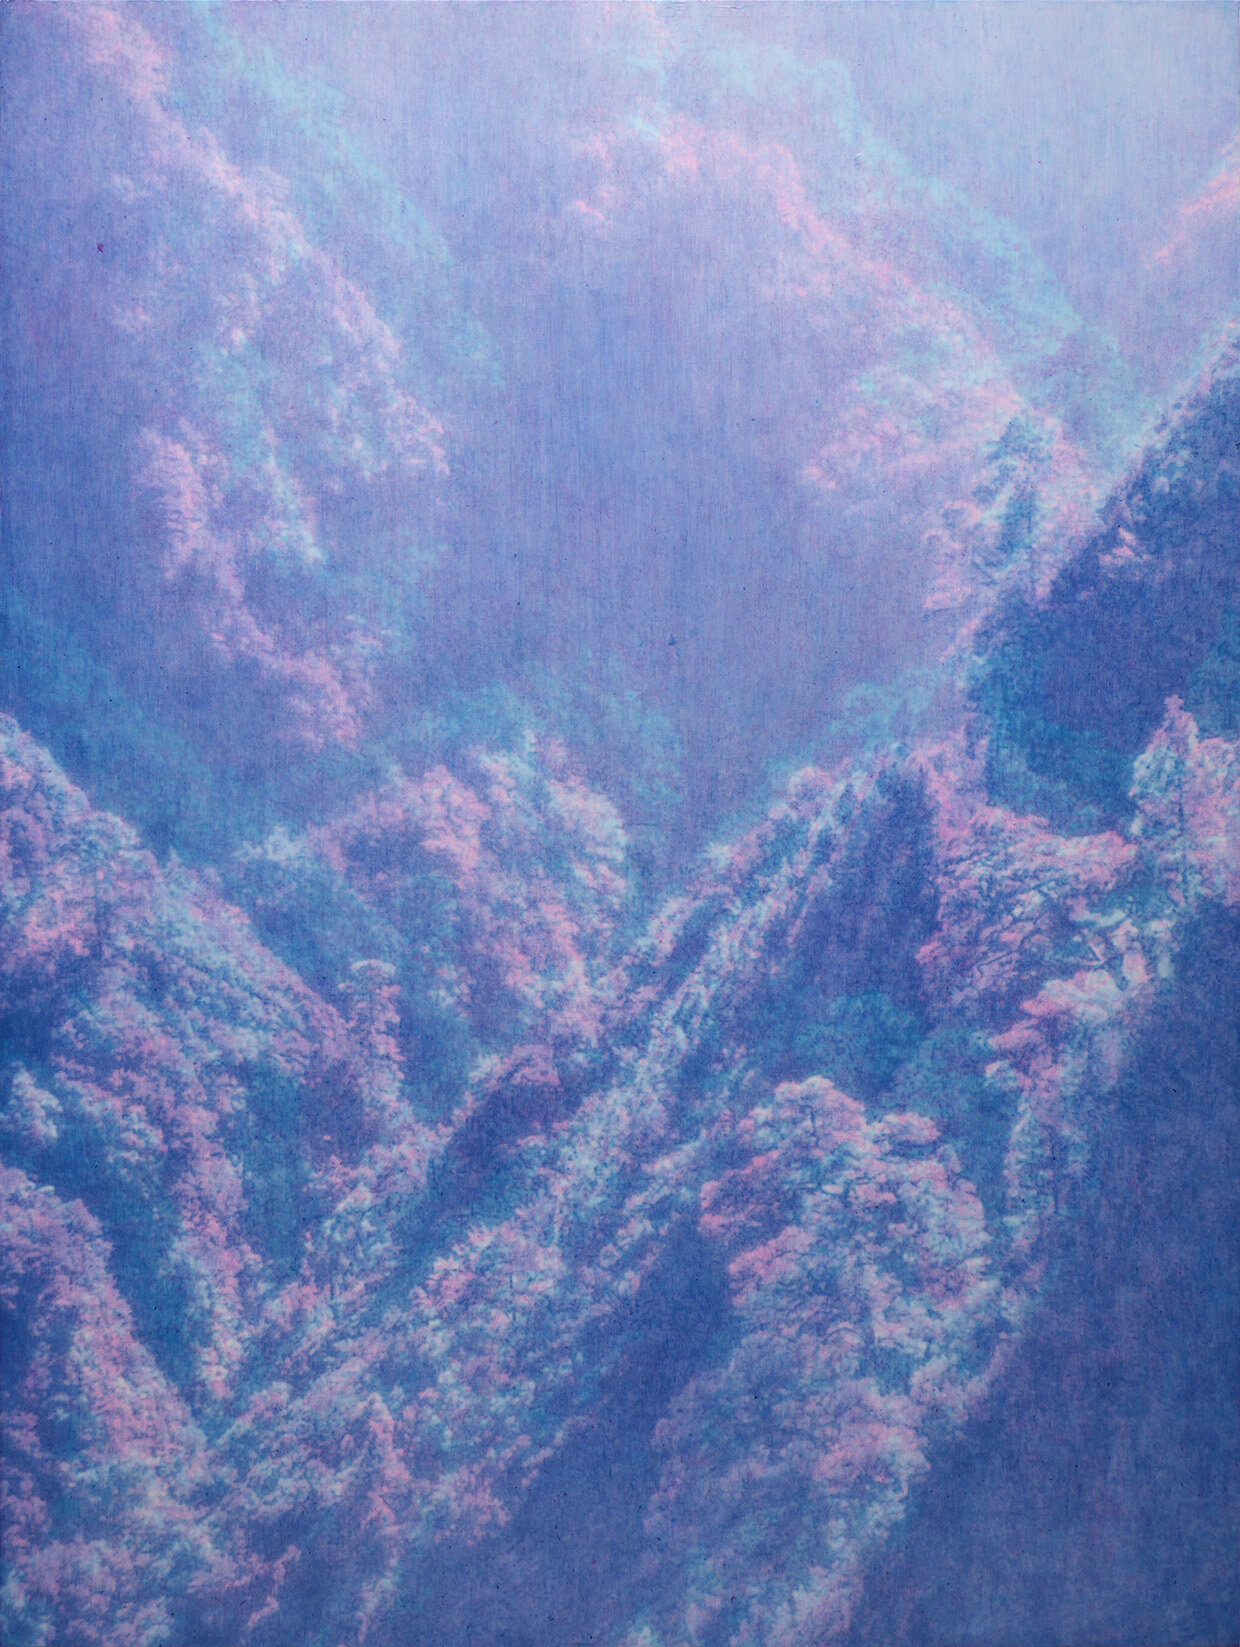  „Ohne Titel“, 2020, Aquarell und Kunstharze auf Leinwand, 160 x 120 cm  